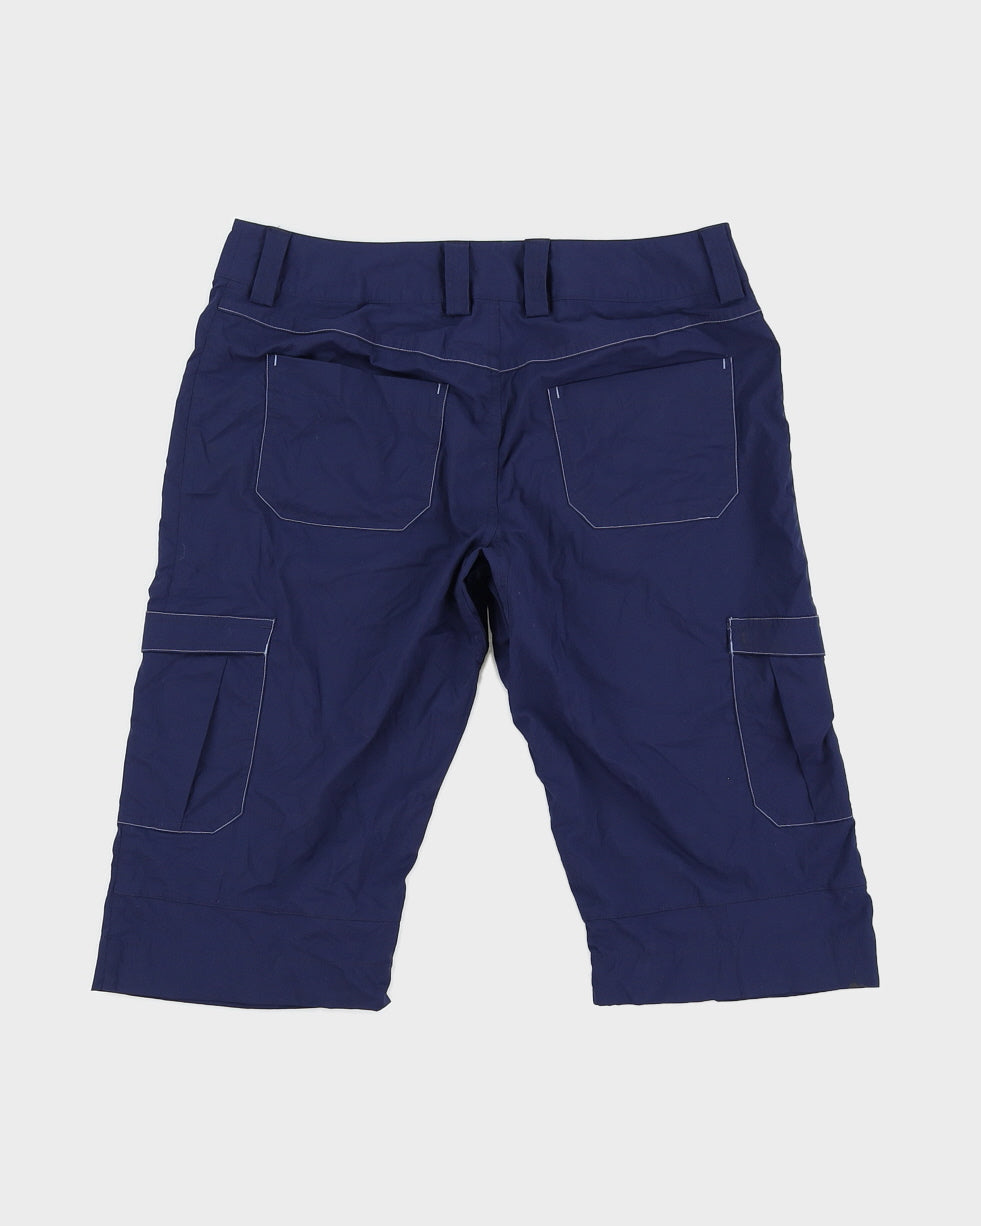 Arct'teryx Blue Shorts - W33